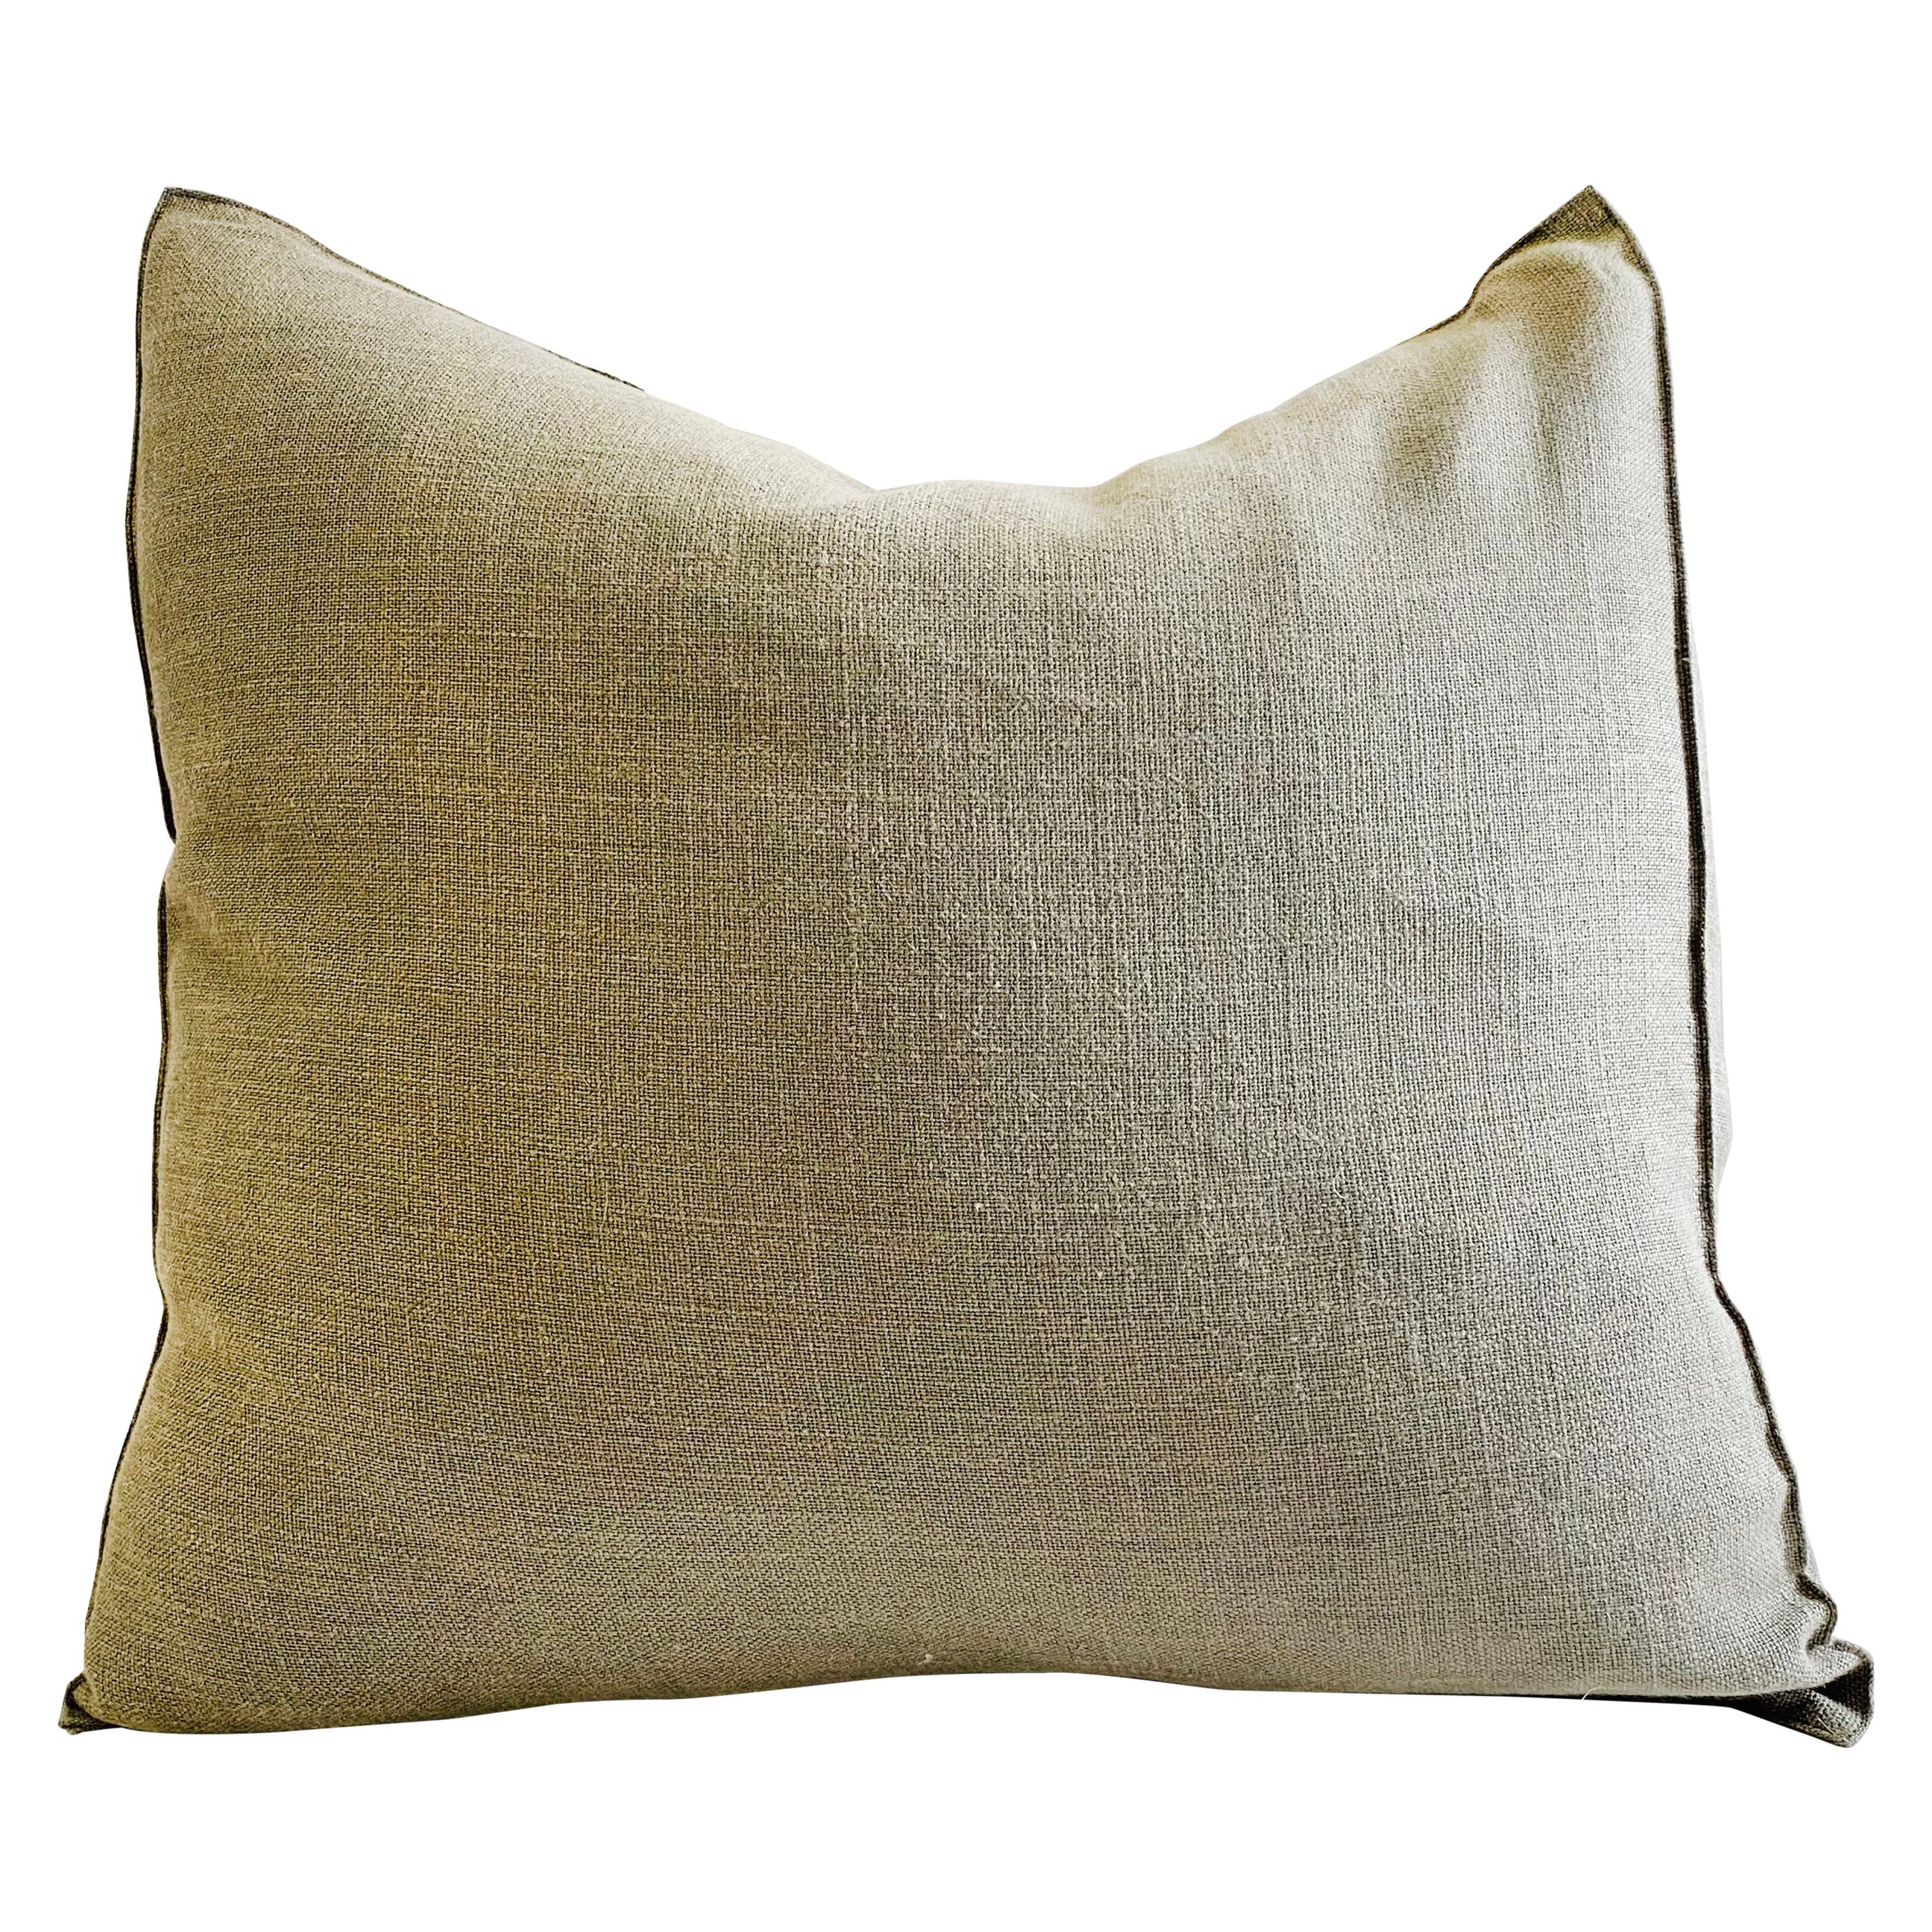 New Belgian Linen Accent Pillow Cover in Kaki Color